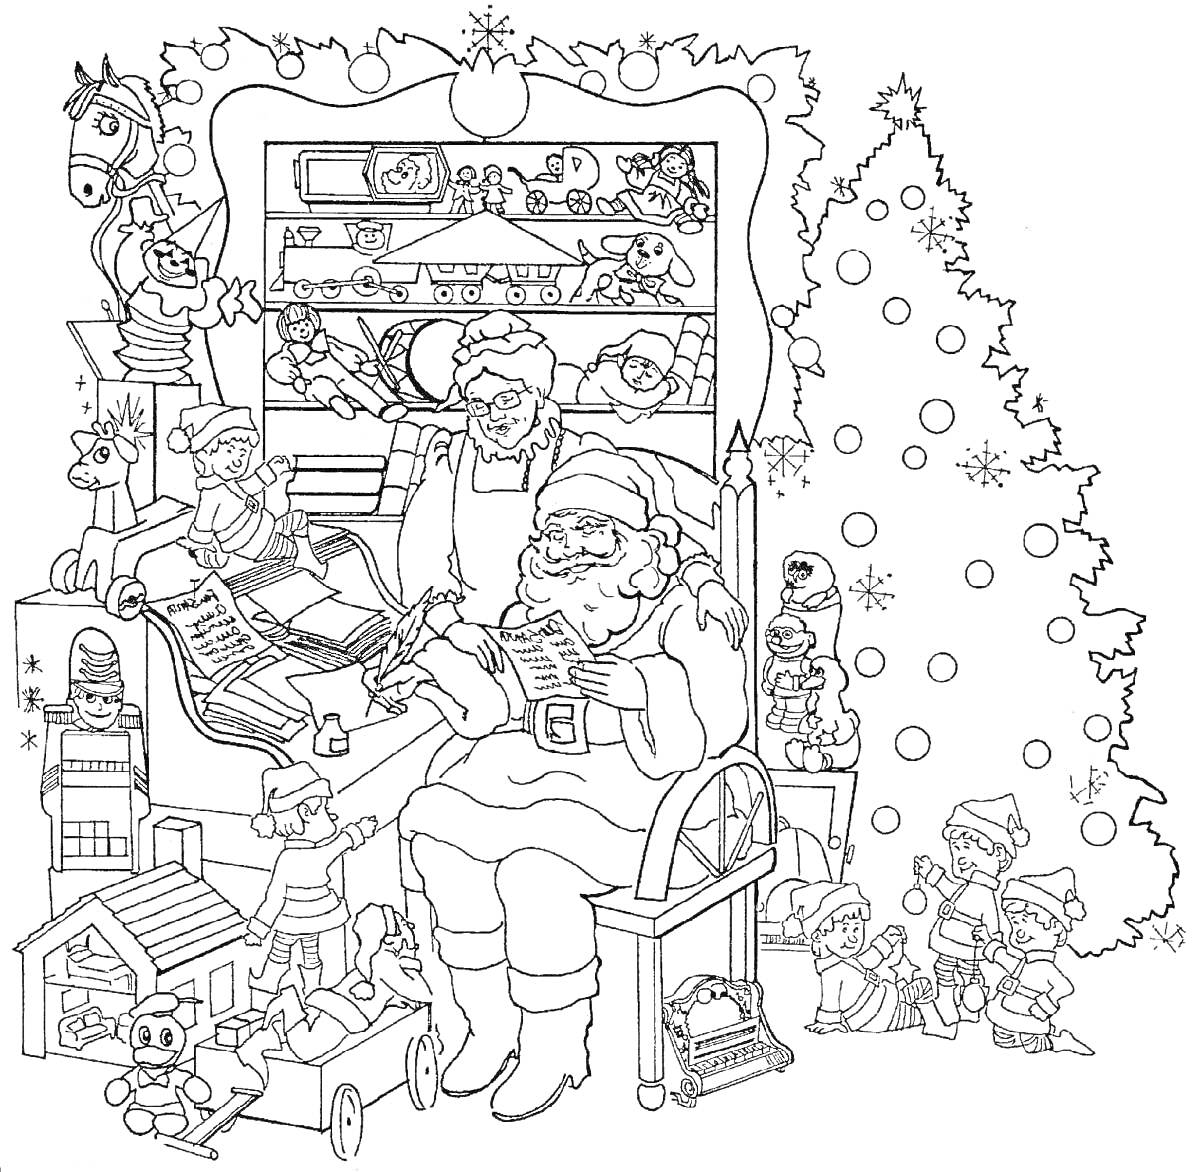 Раскраска Санта с помощниками и игрушками у елки